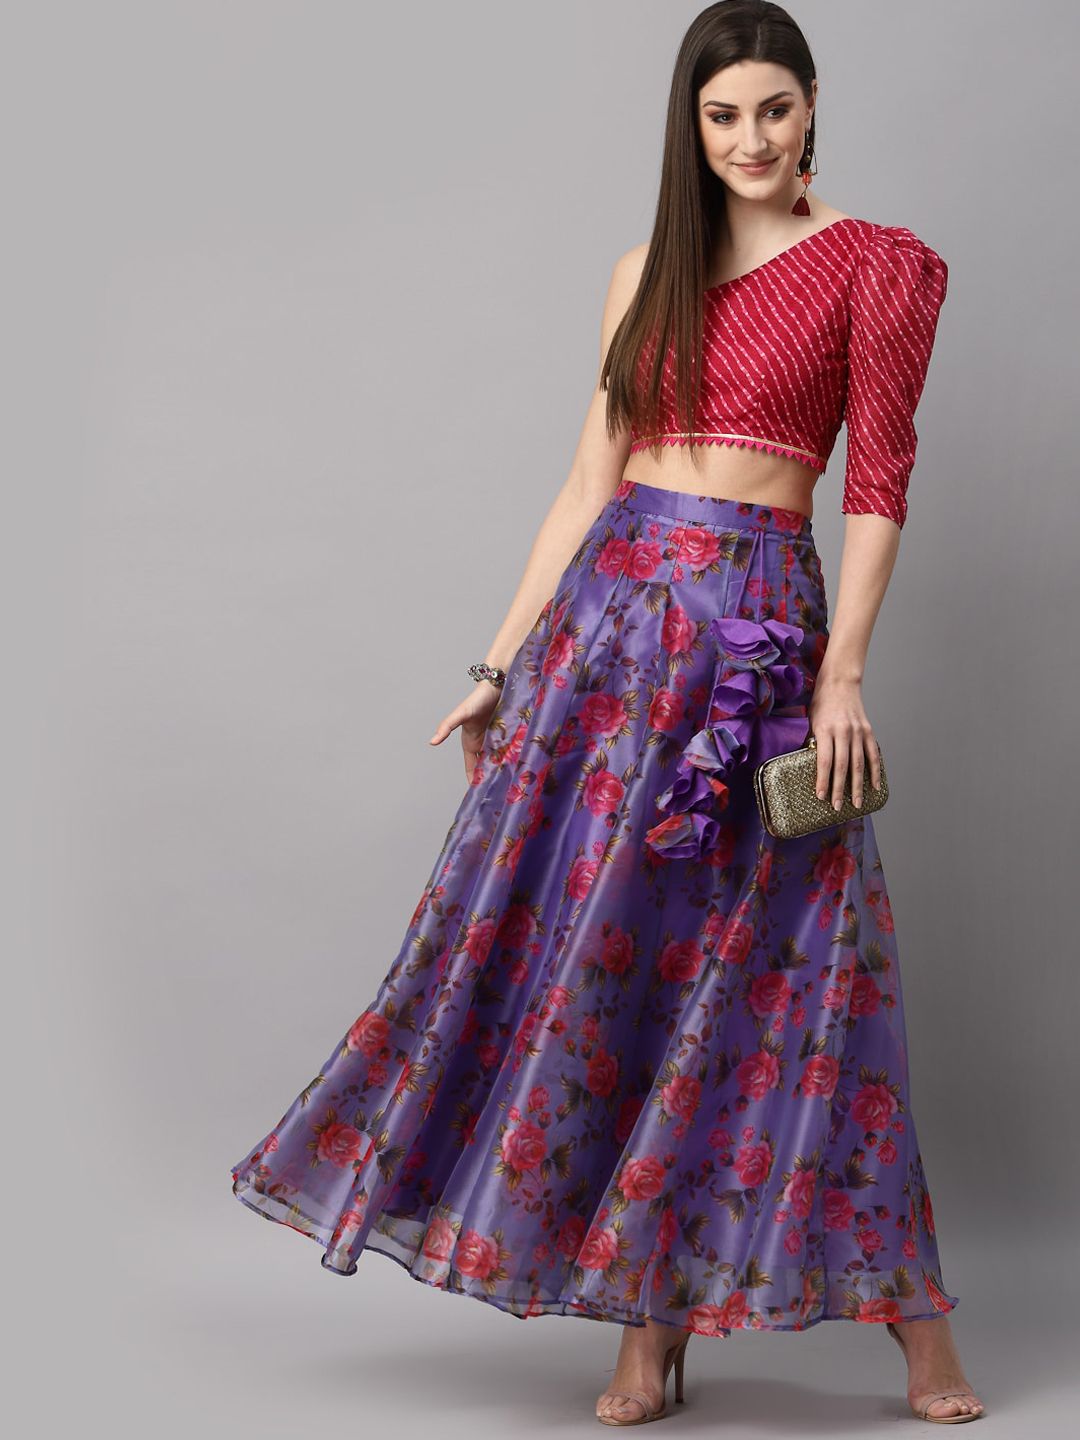 NEUDIS Women Purple & Maroon Printed Flared Maxi Skirt With Top Price in India